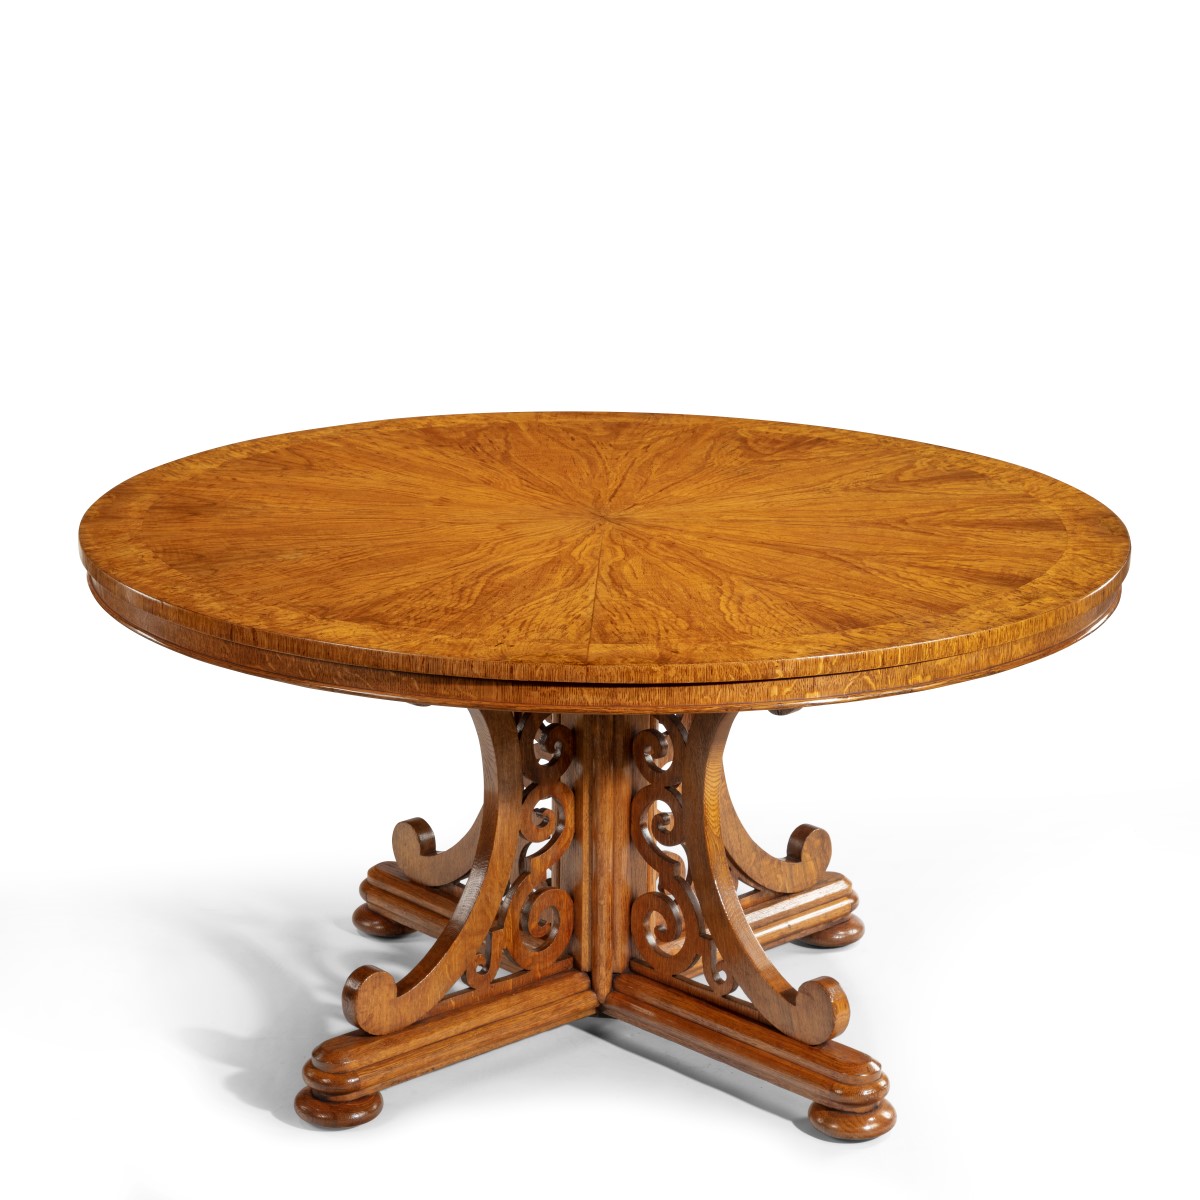 A fine Victorian pollard oak centre table, in the manner of Bridgens,